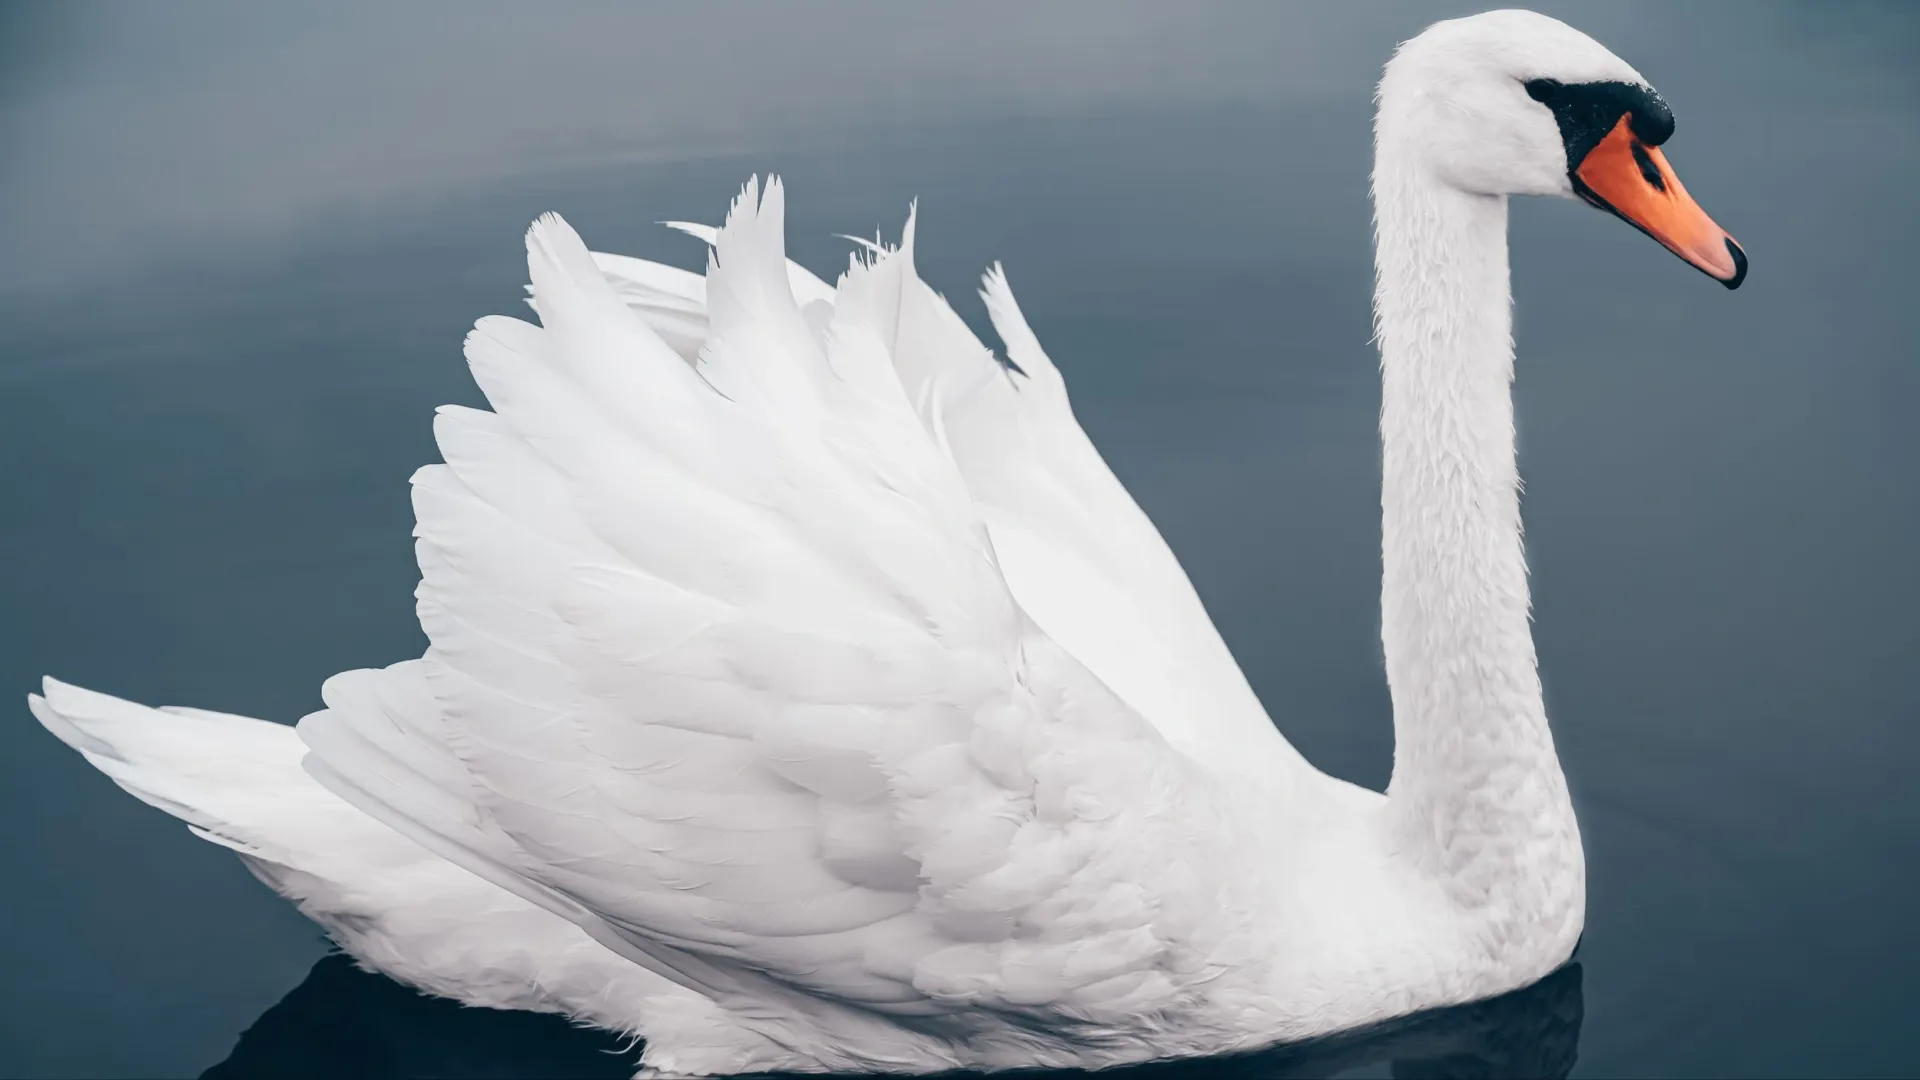 Белый лебедь — символ изящества и красоты. Фото: Malikov Aleksandr / Shutterstock / Fotodom